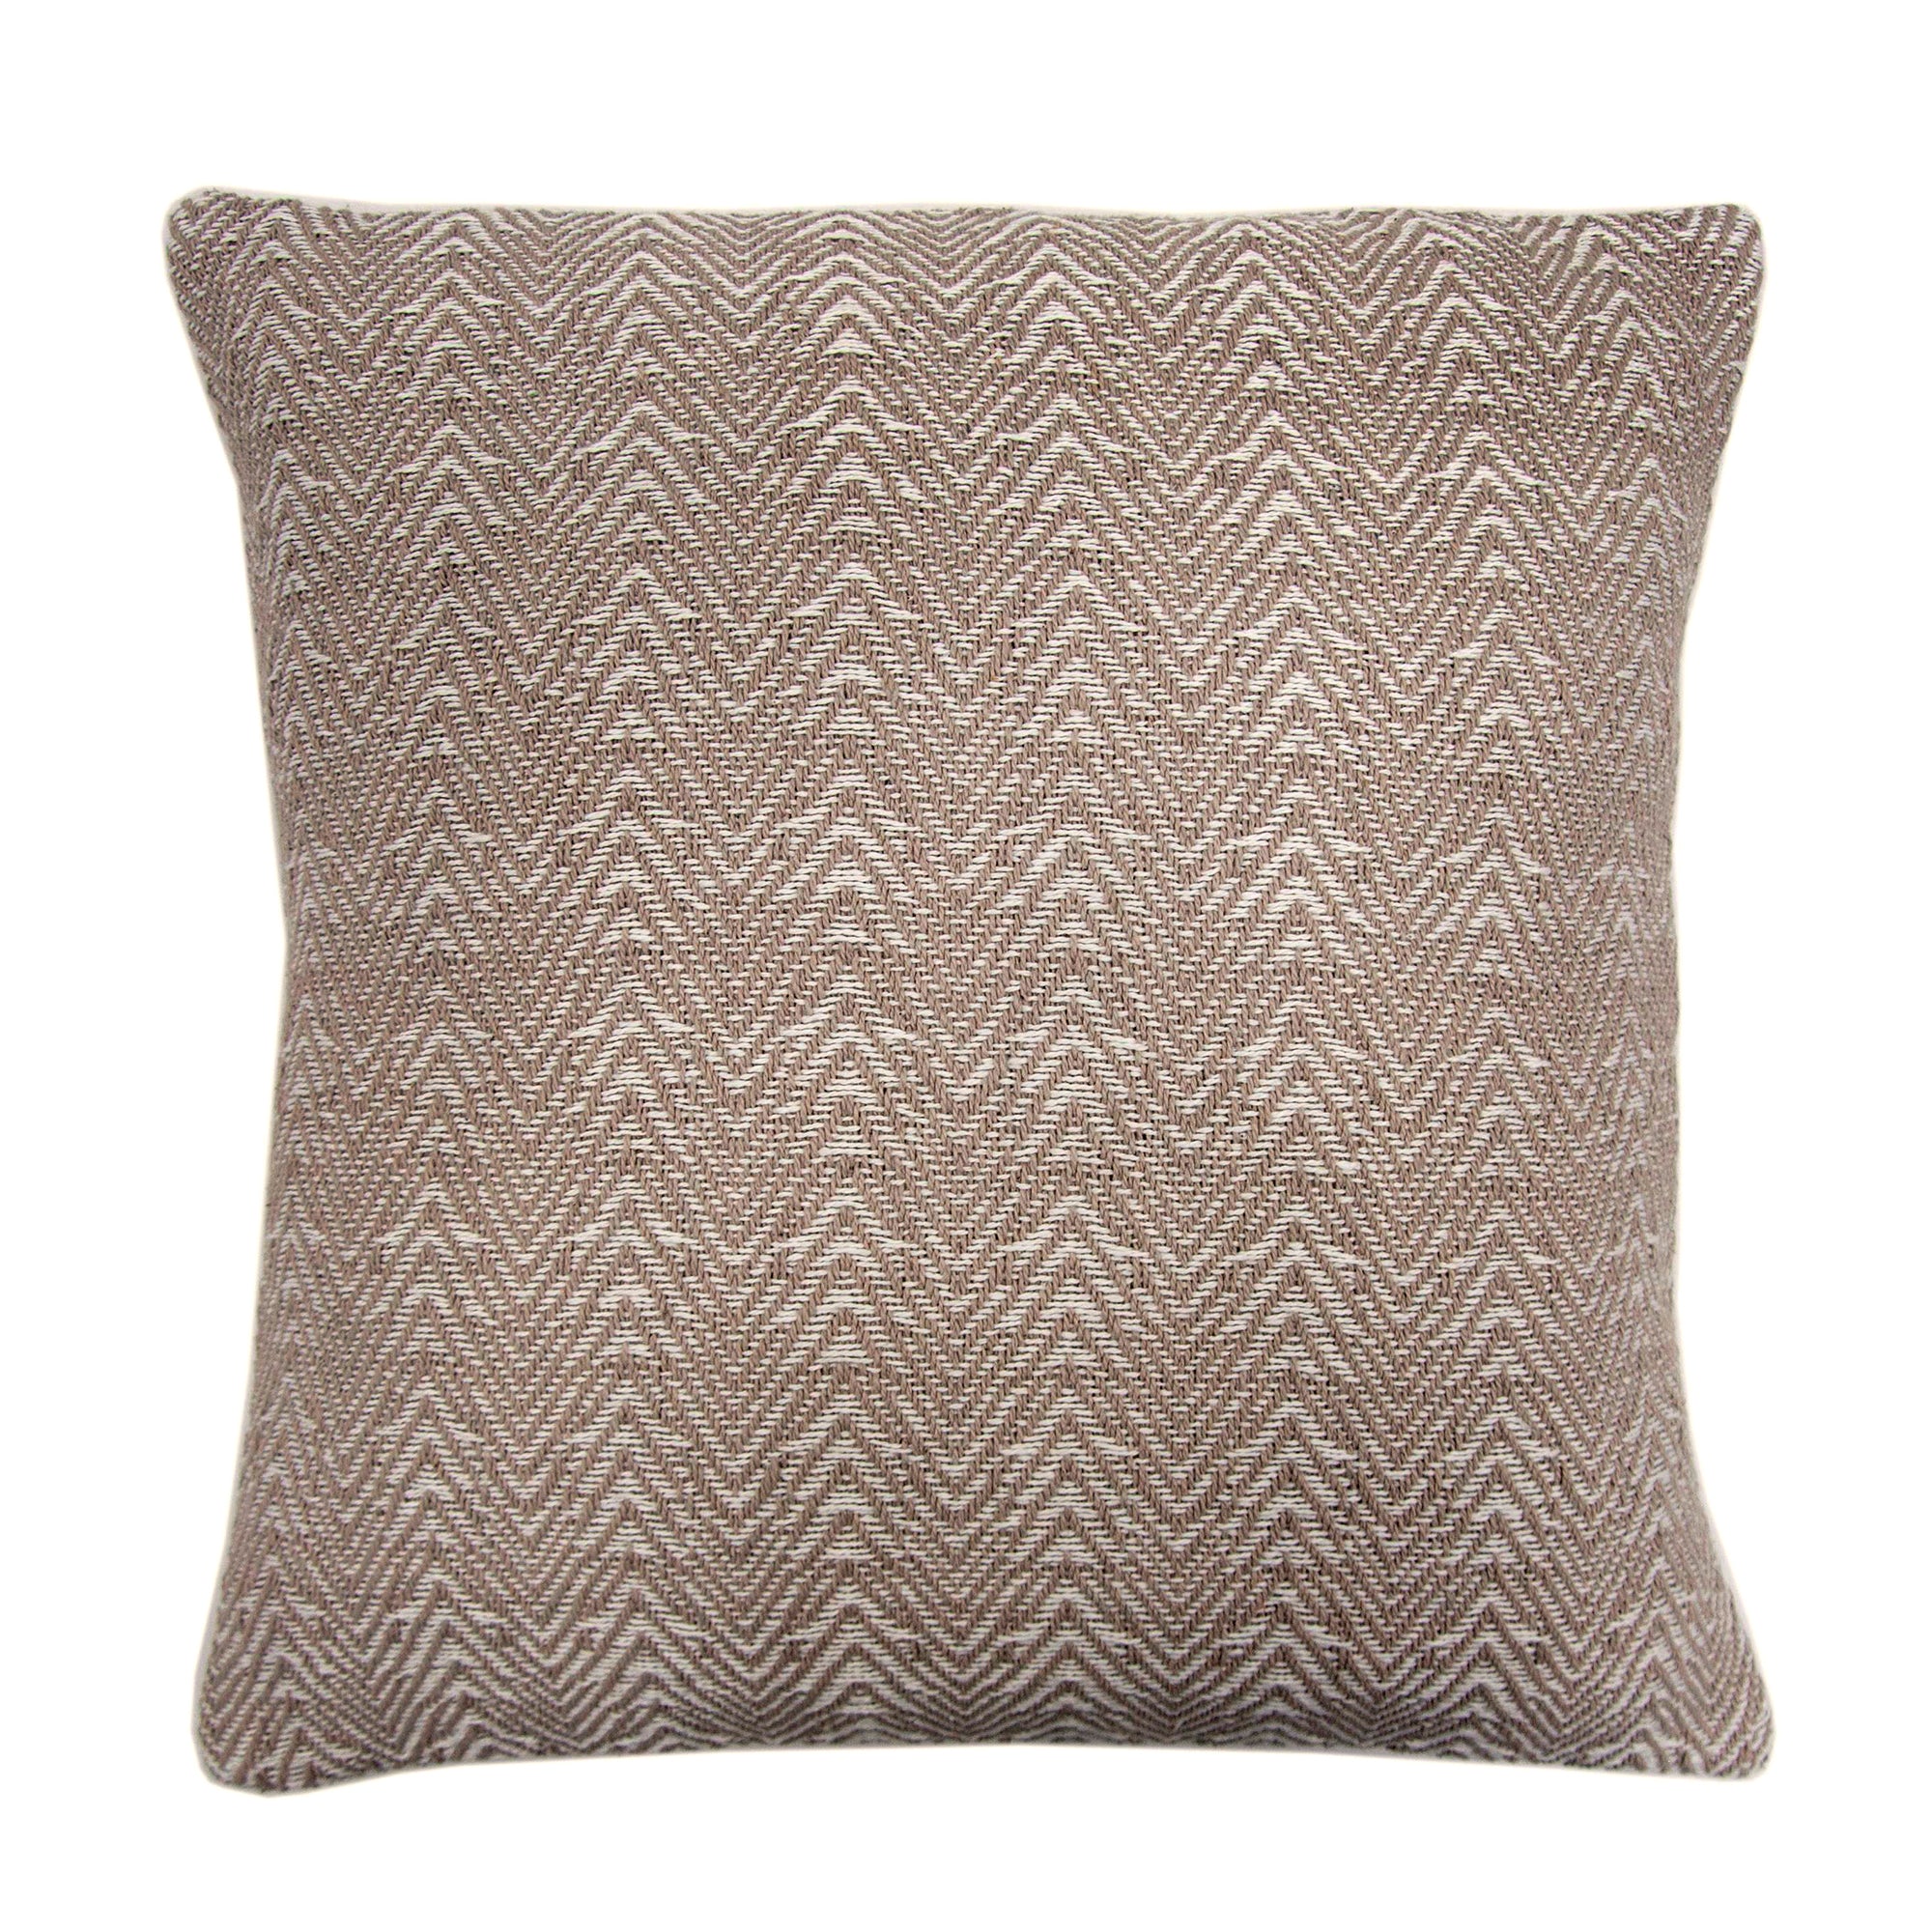 Herringbone - 100% Cotton Filled Cushion - by Appletree Loft